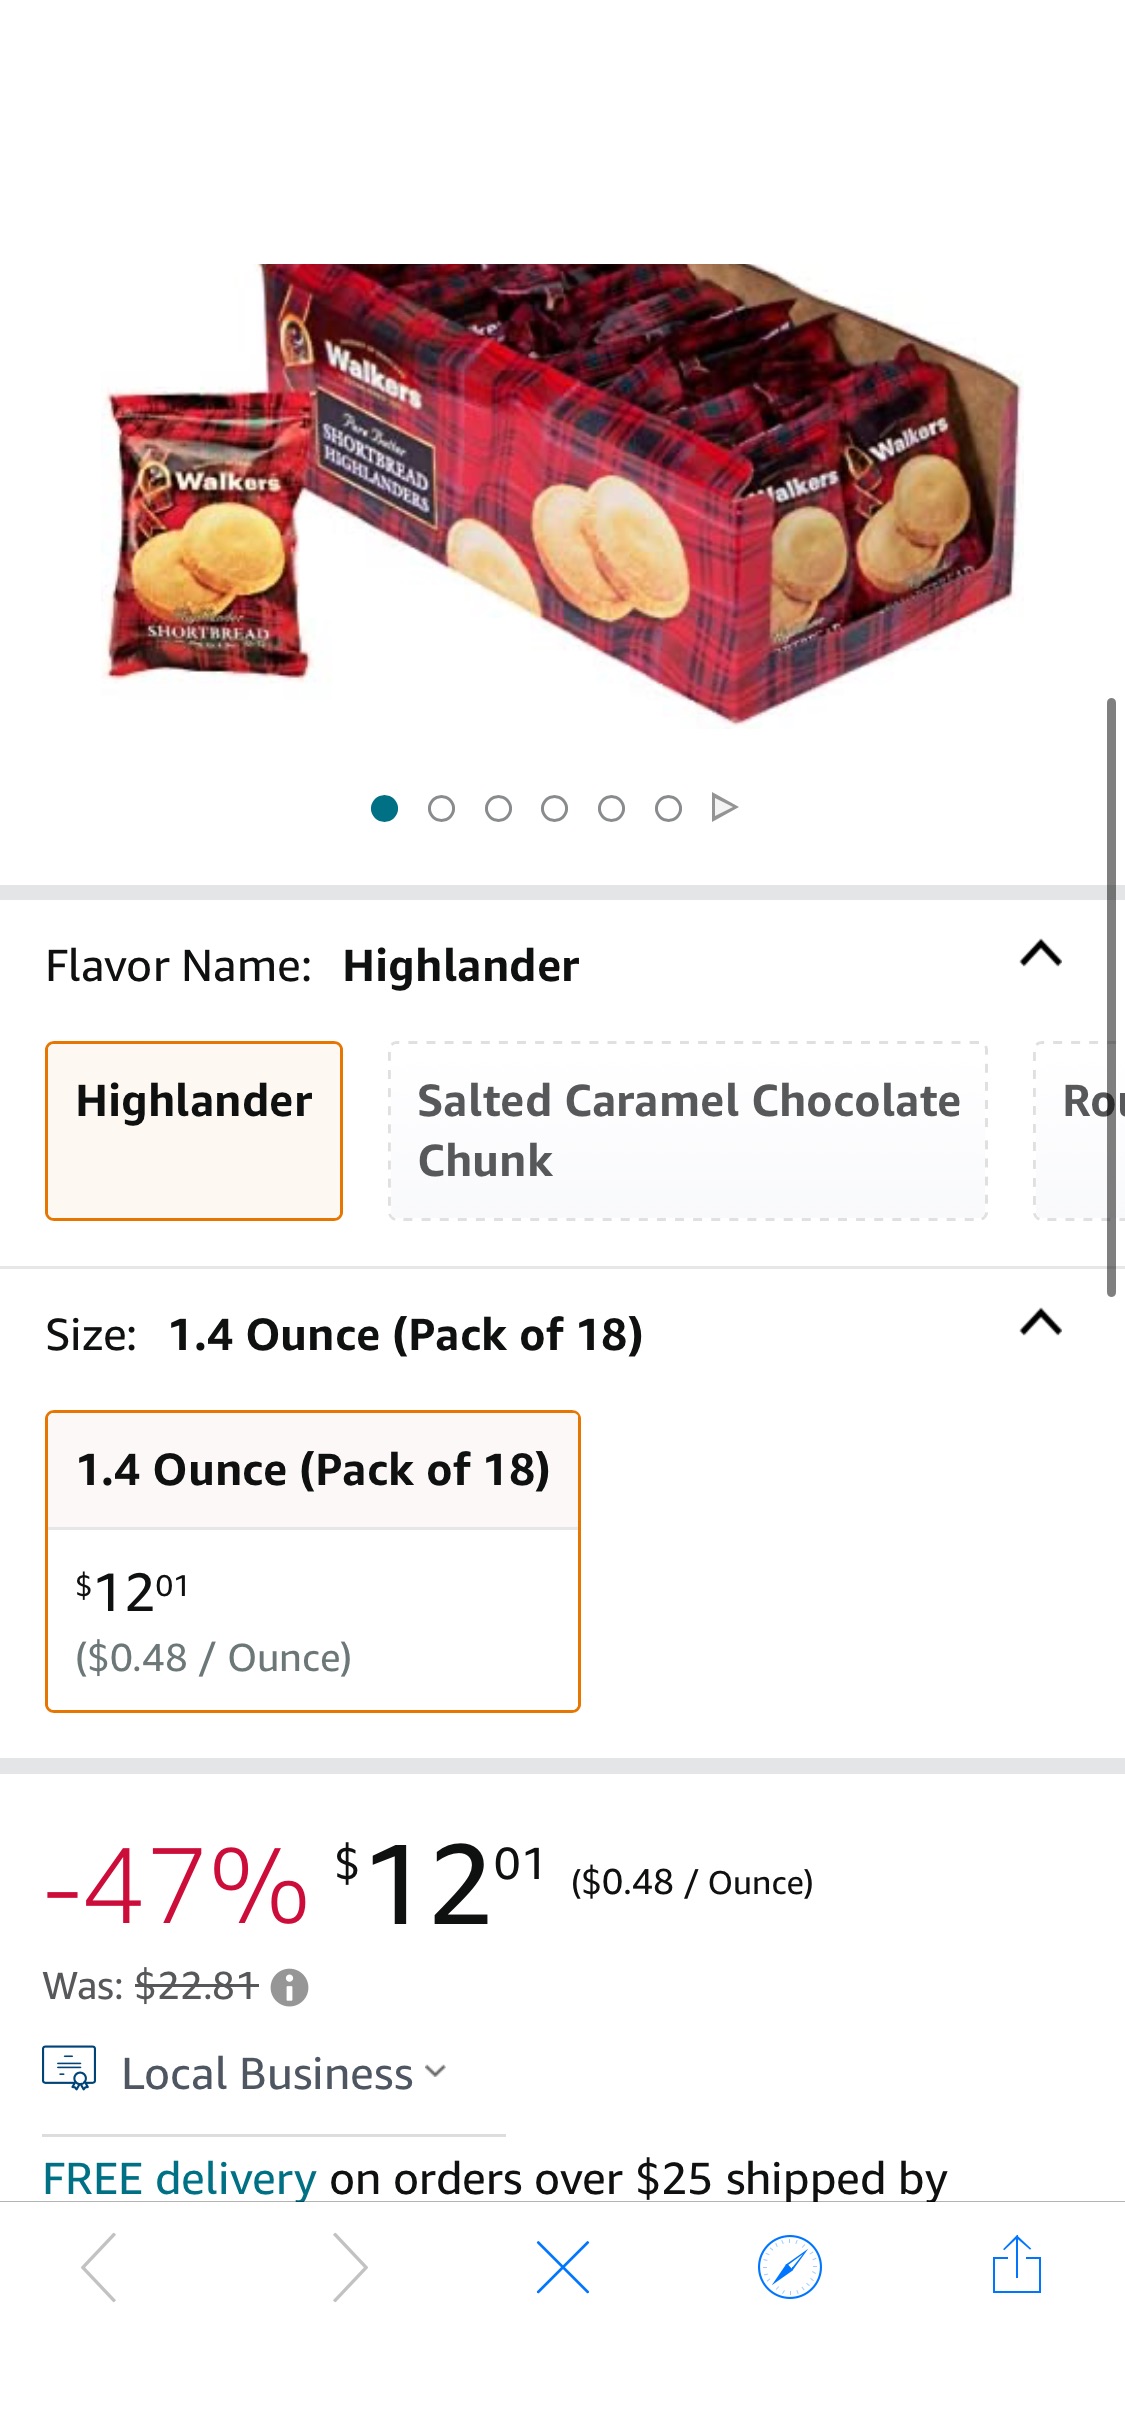 Amazon.com: Walker's Shortbread Highlanders, Pure Butter Shortbread Cookies, Snack Pack, 1.4 Oz (Pack of 18)